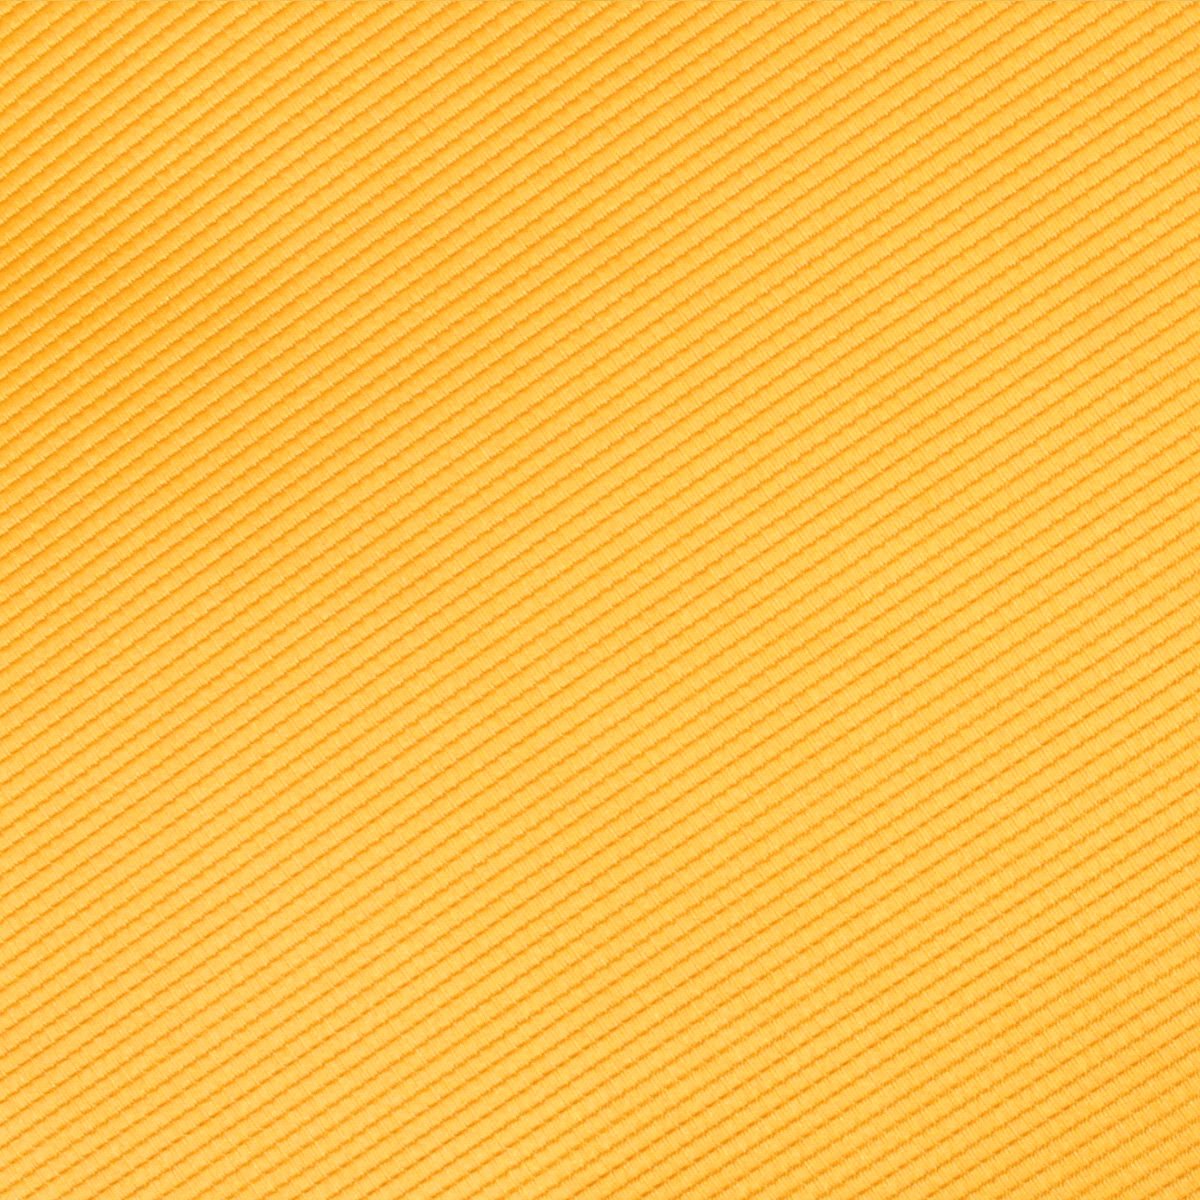 Honey Gold Yellow Twill Pocket Square Fabric